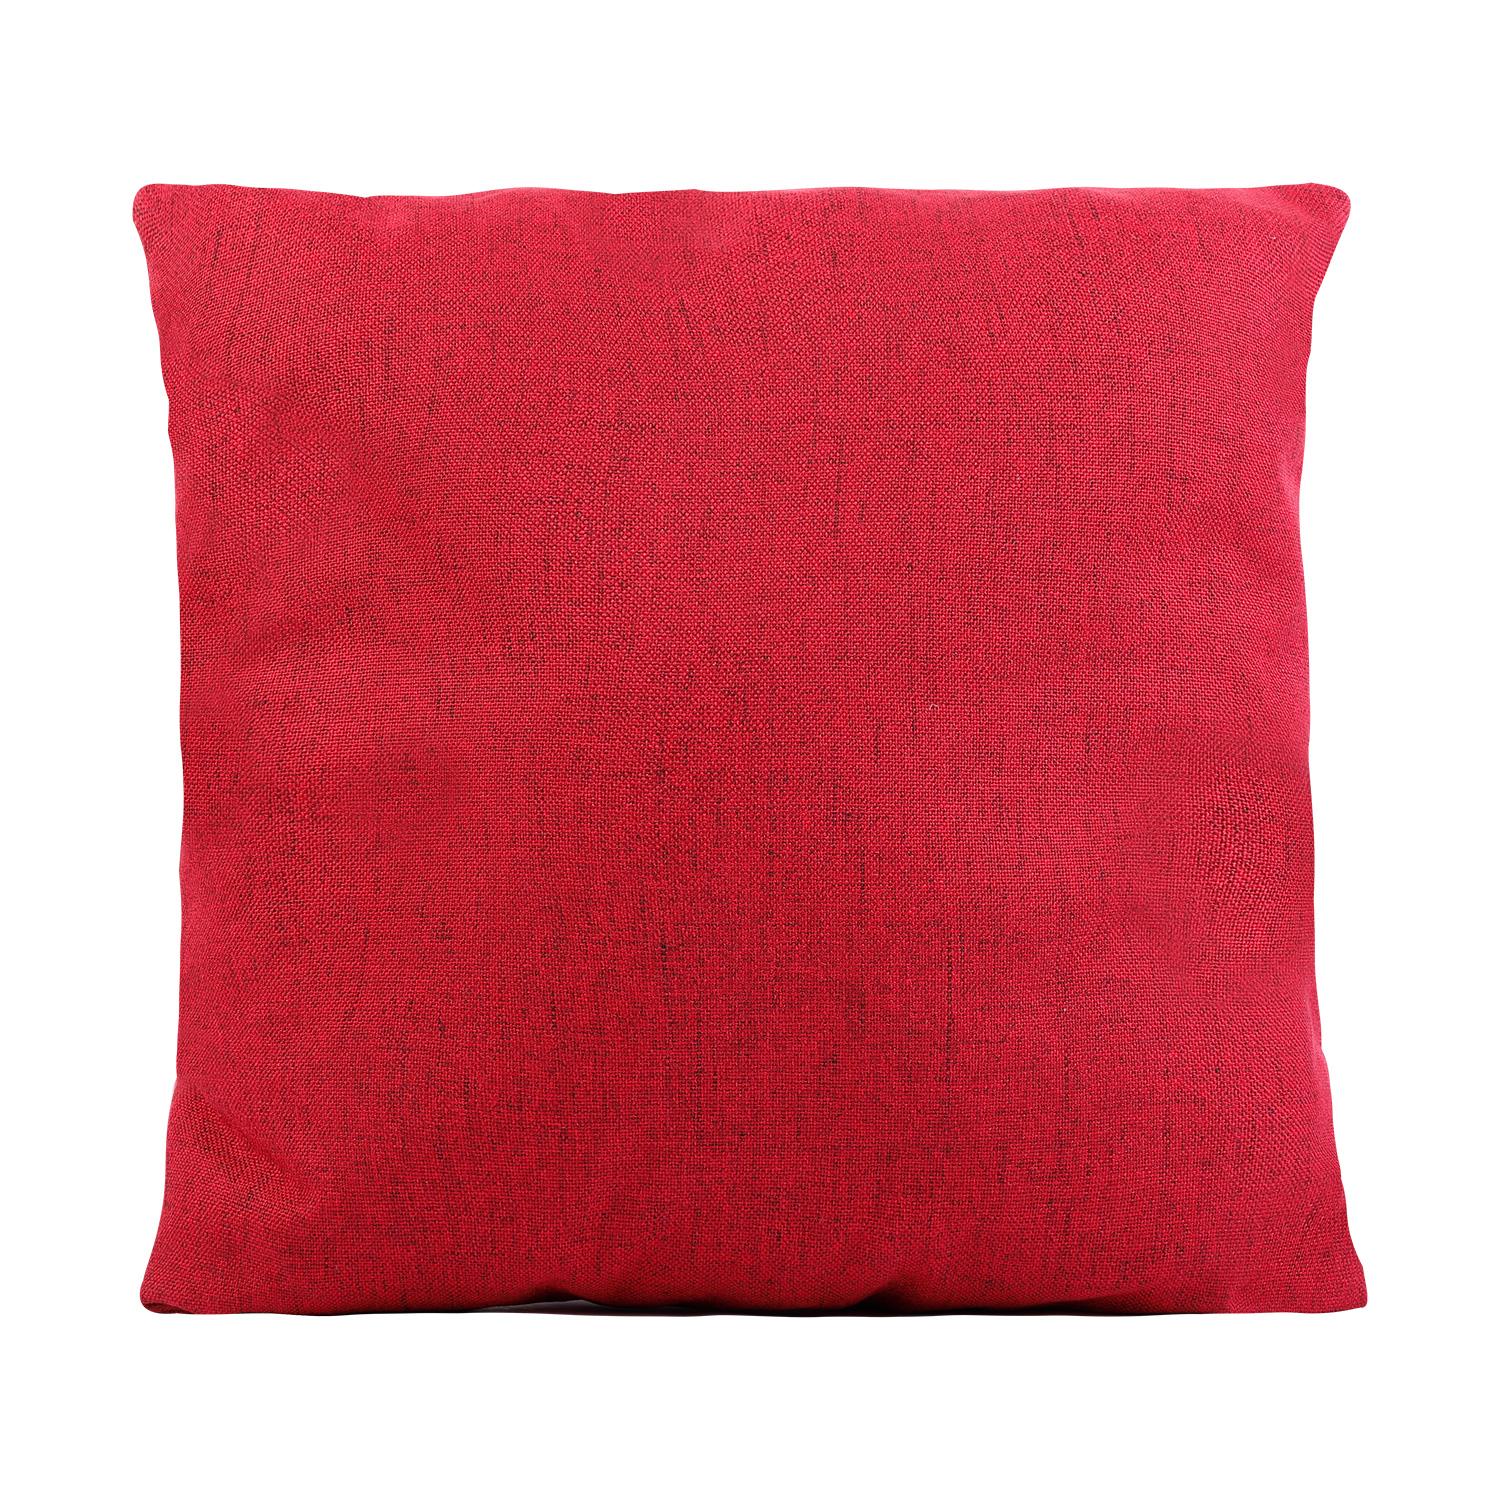 وسادة مربعة 44 * 44 سم - أحمر PARRY LIFE Decorative Jacquard Cushion Pillow